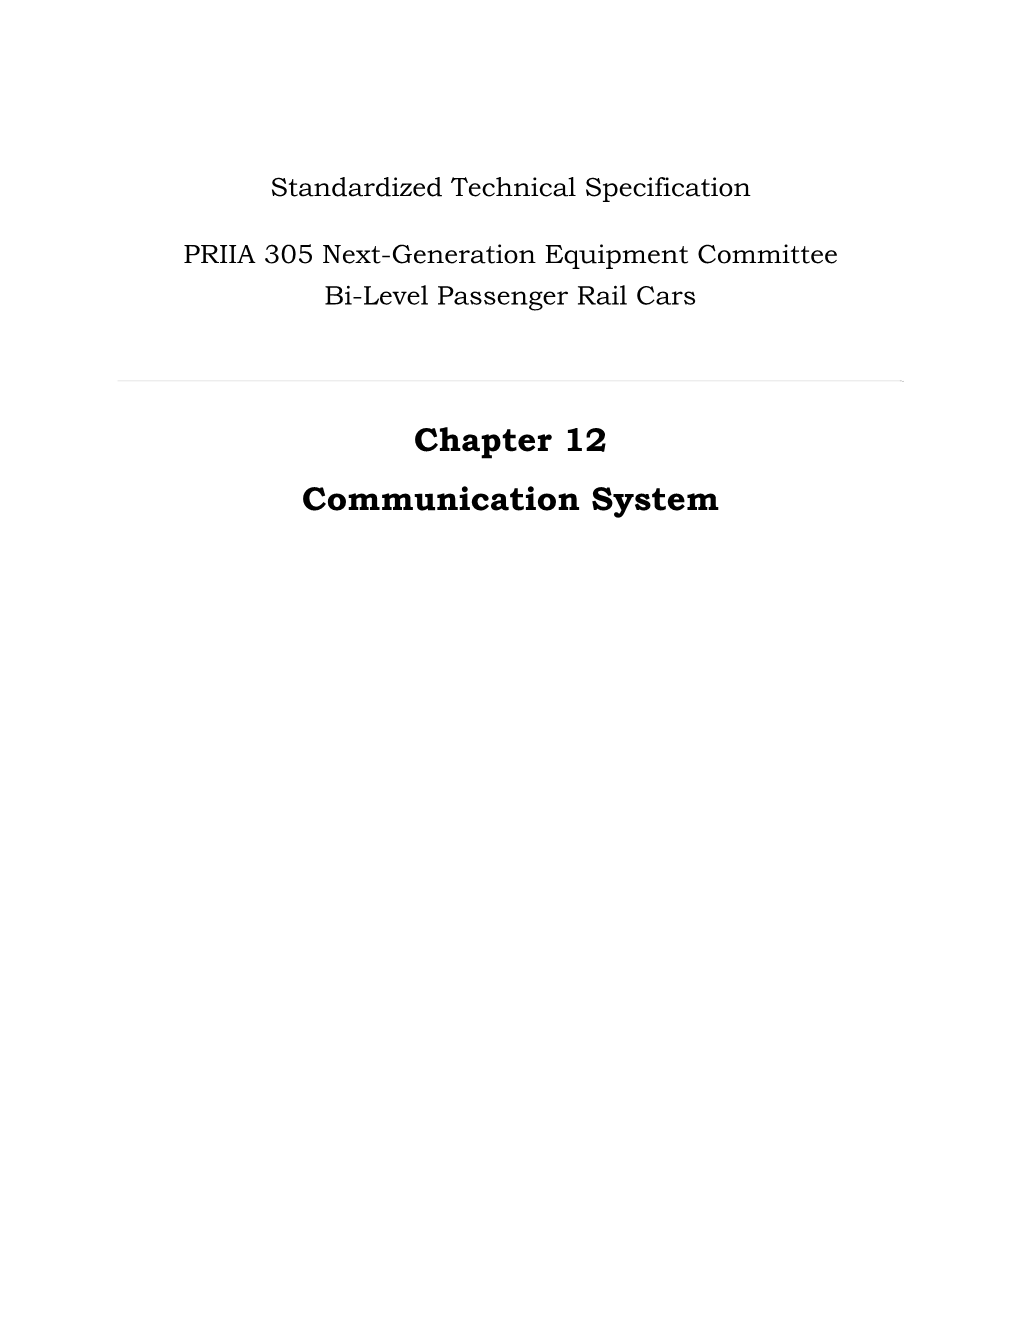 Chapter 12 Communication System